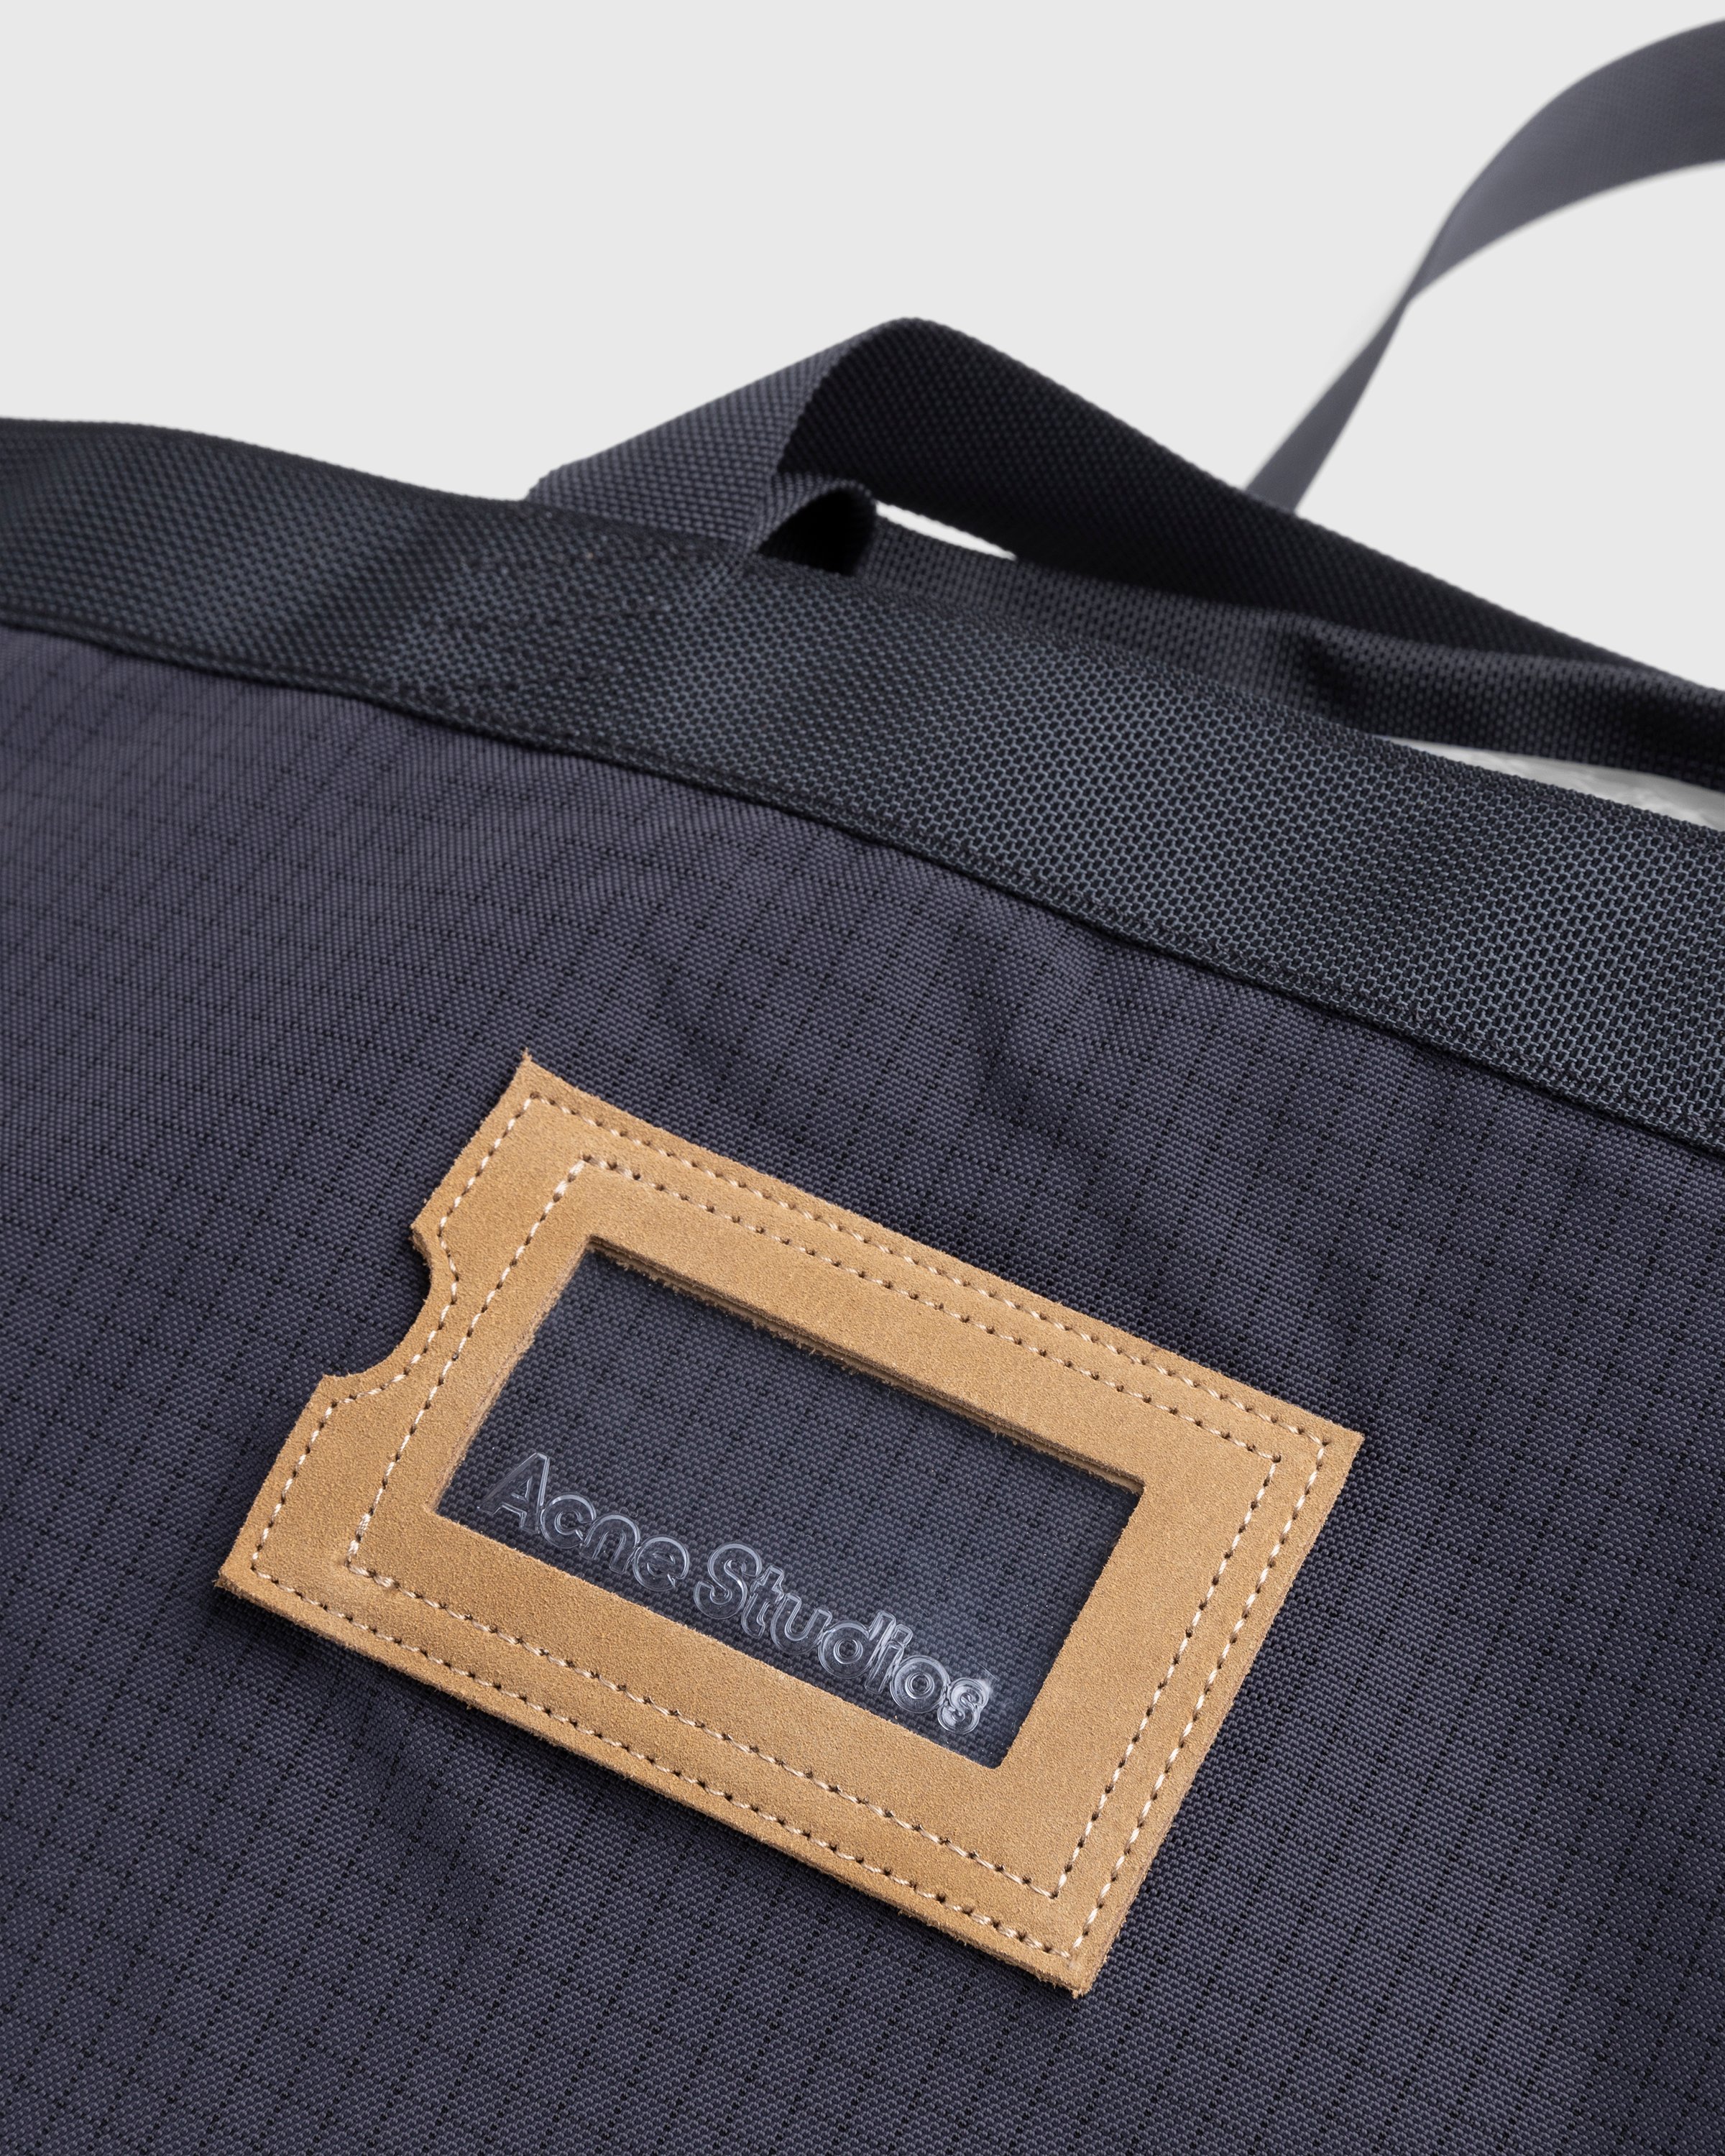 Acne Studios - Nylon Tote Bag Black - Accessories - Black - Image 6